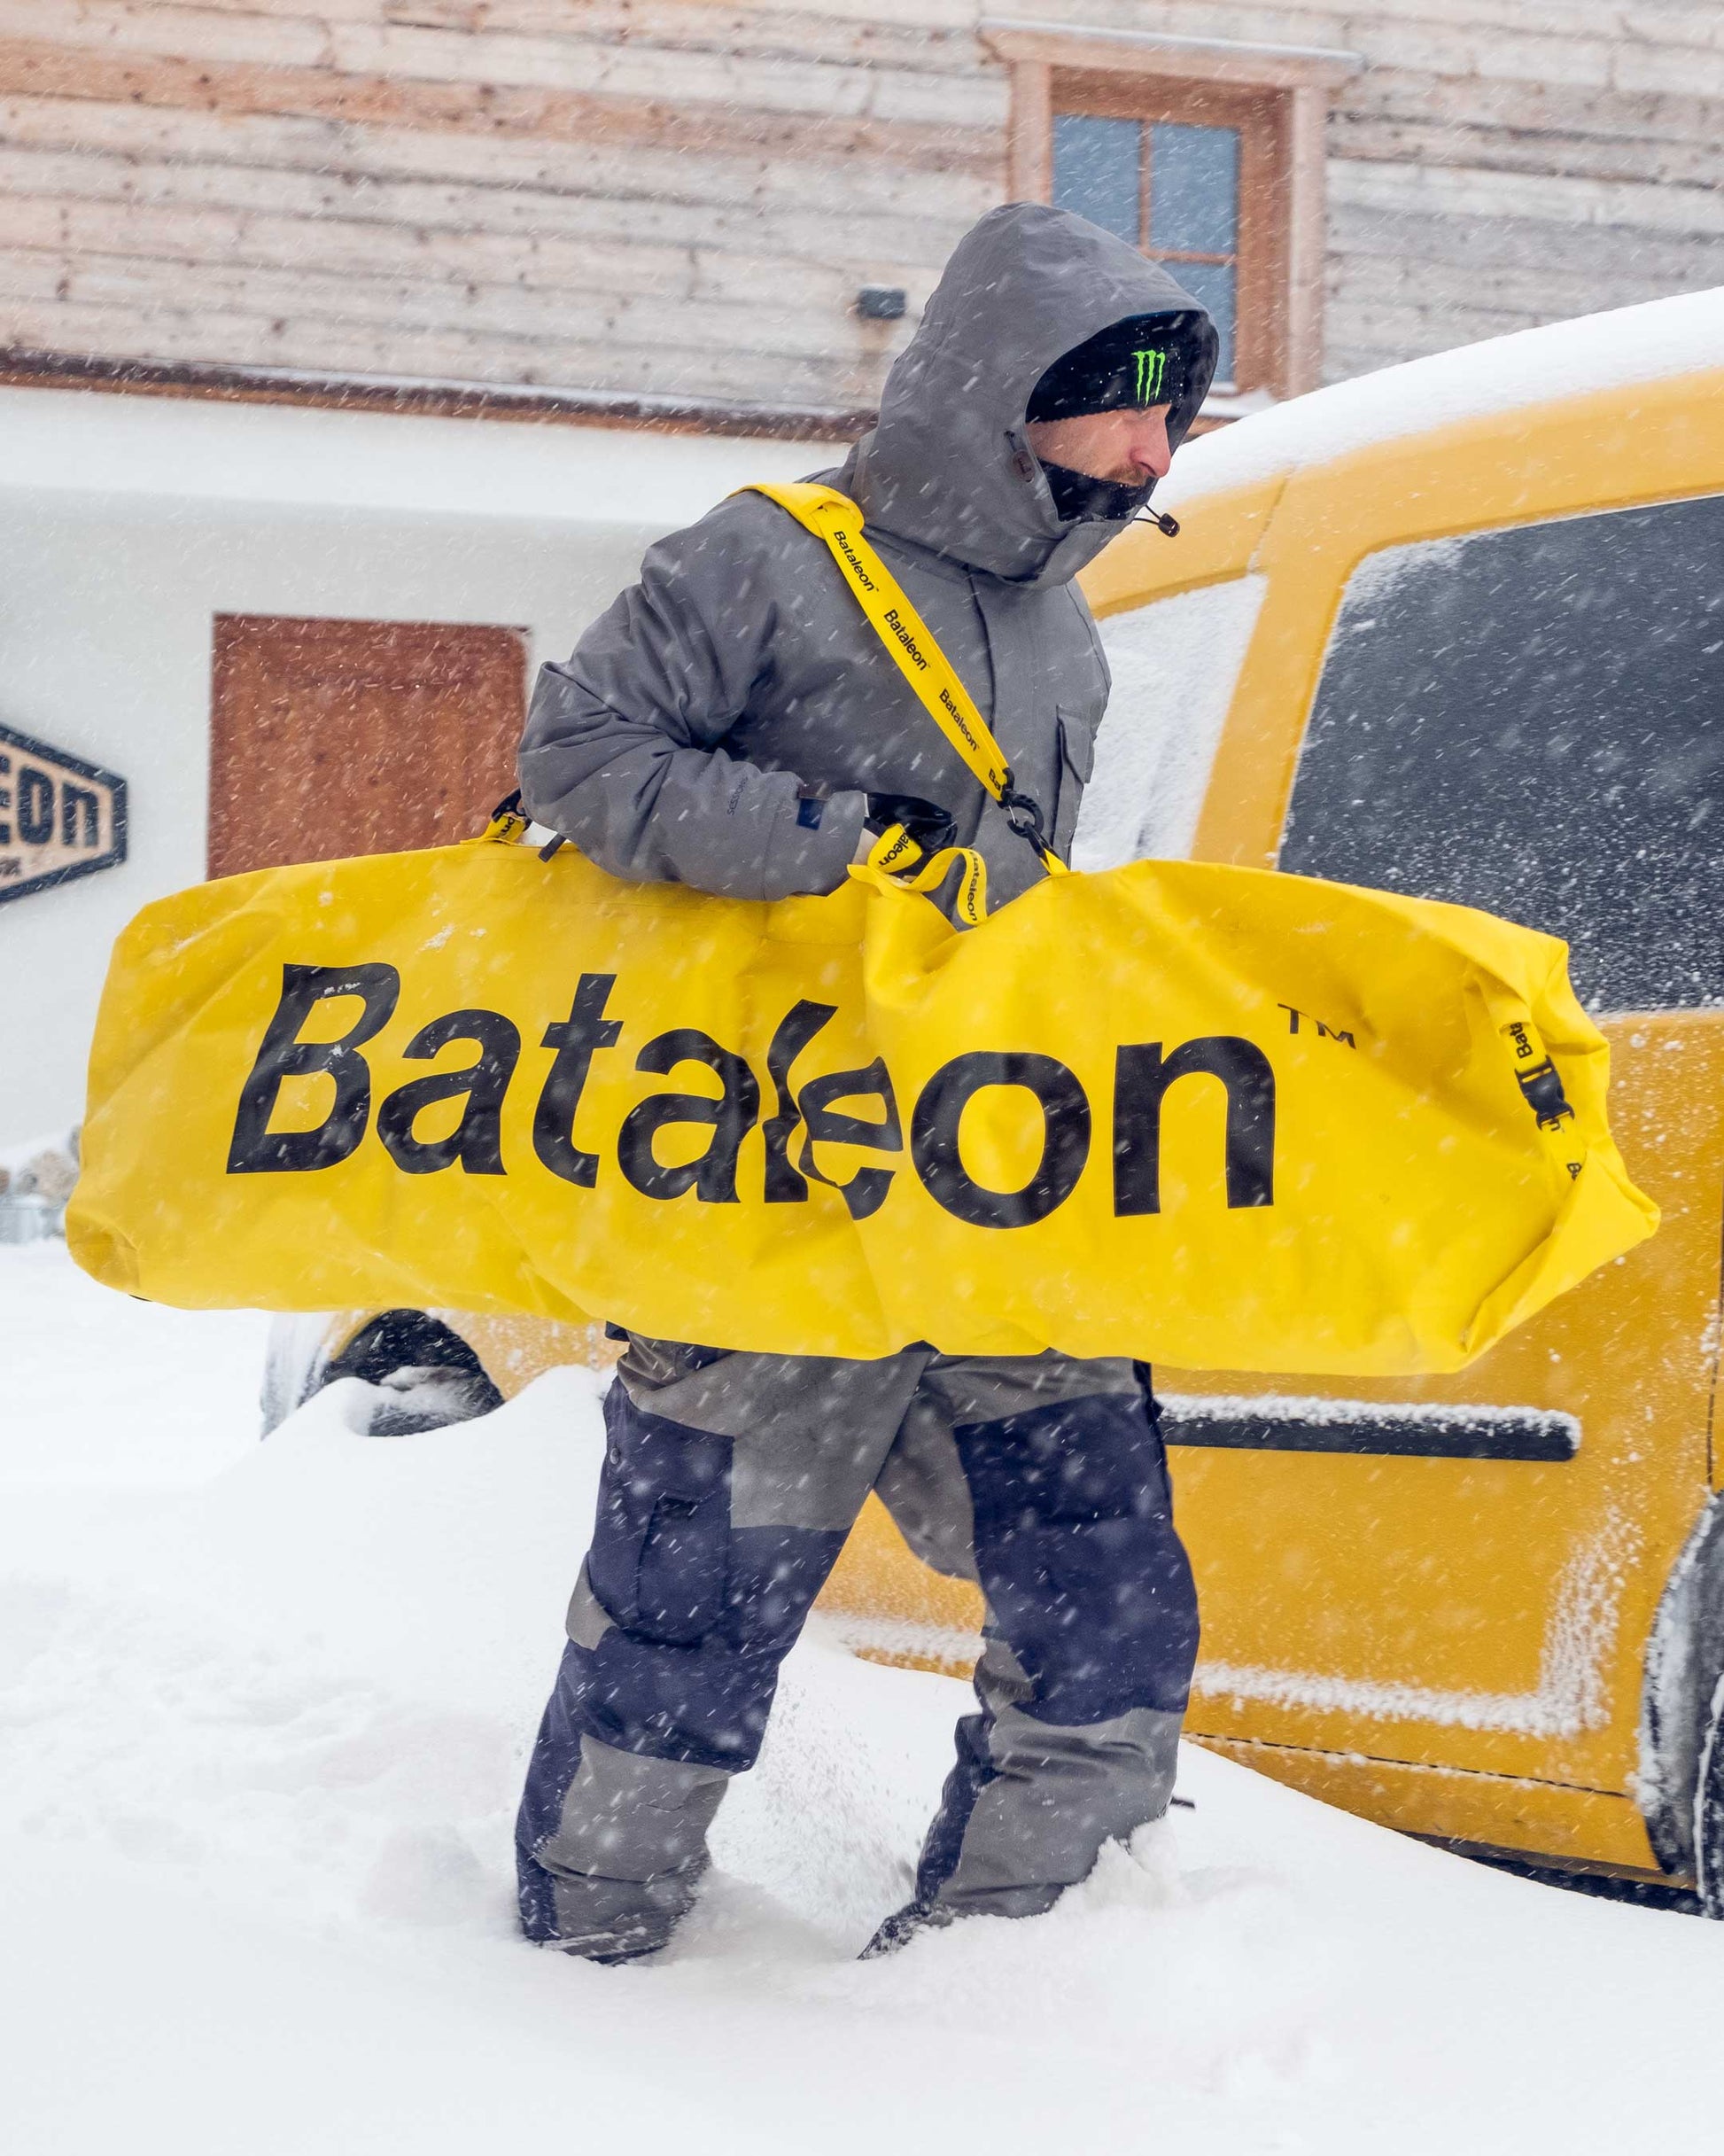 Bataleon getaway yellow snowboard travel bag 2020 - 2021 product image by Bataleon Snowboards 6